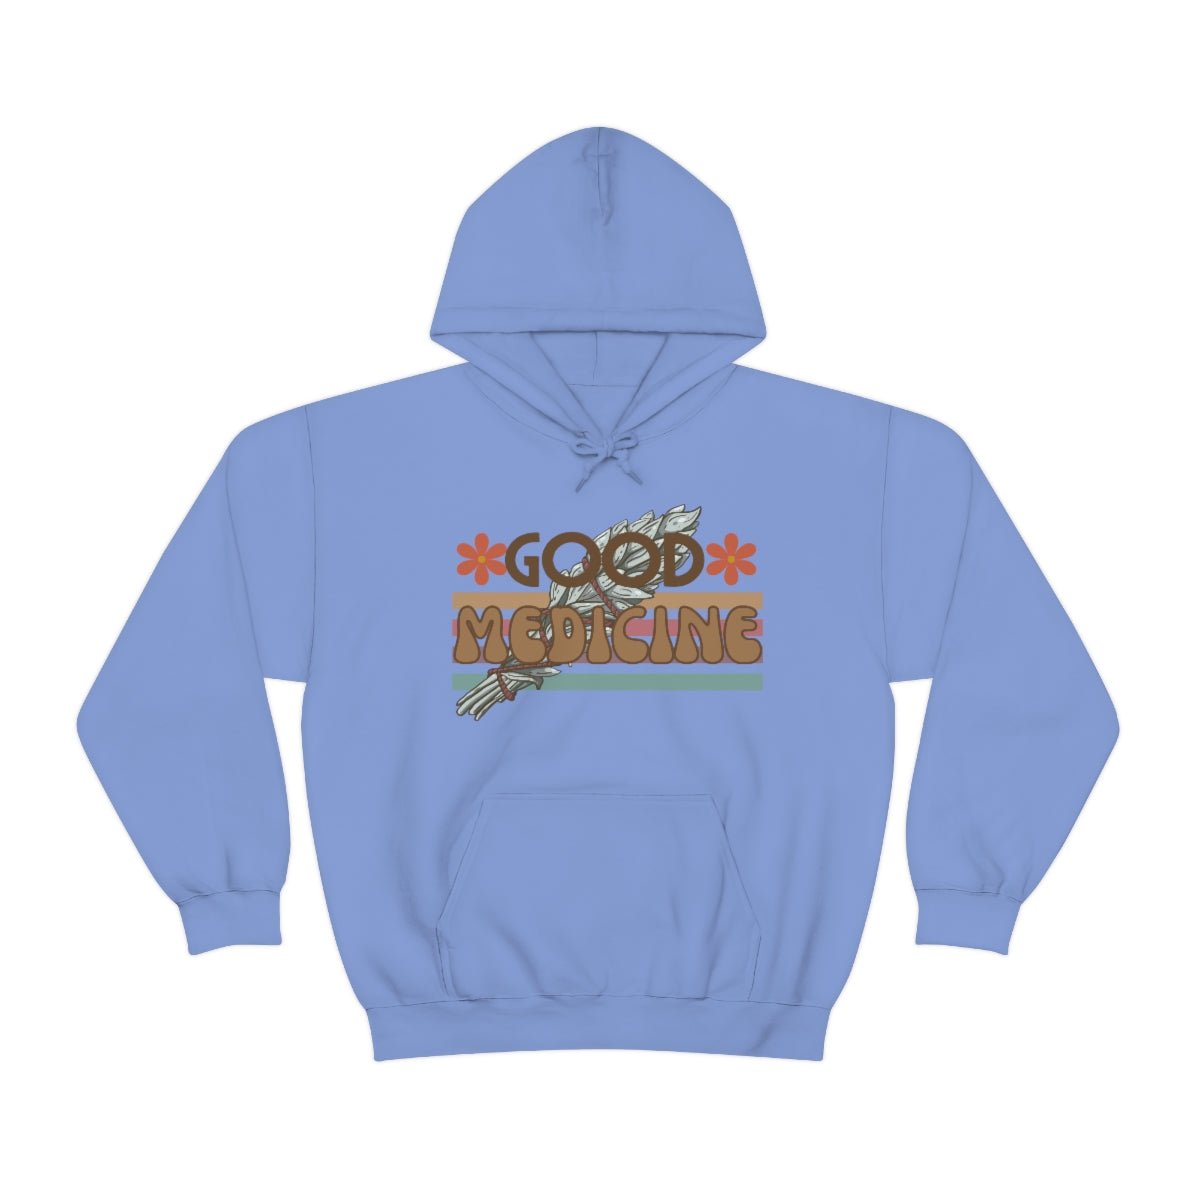 Good Medicine Native Heavy Hooded Sweatshirt - Nikikw Designs